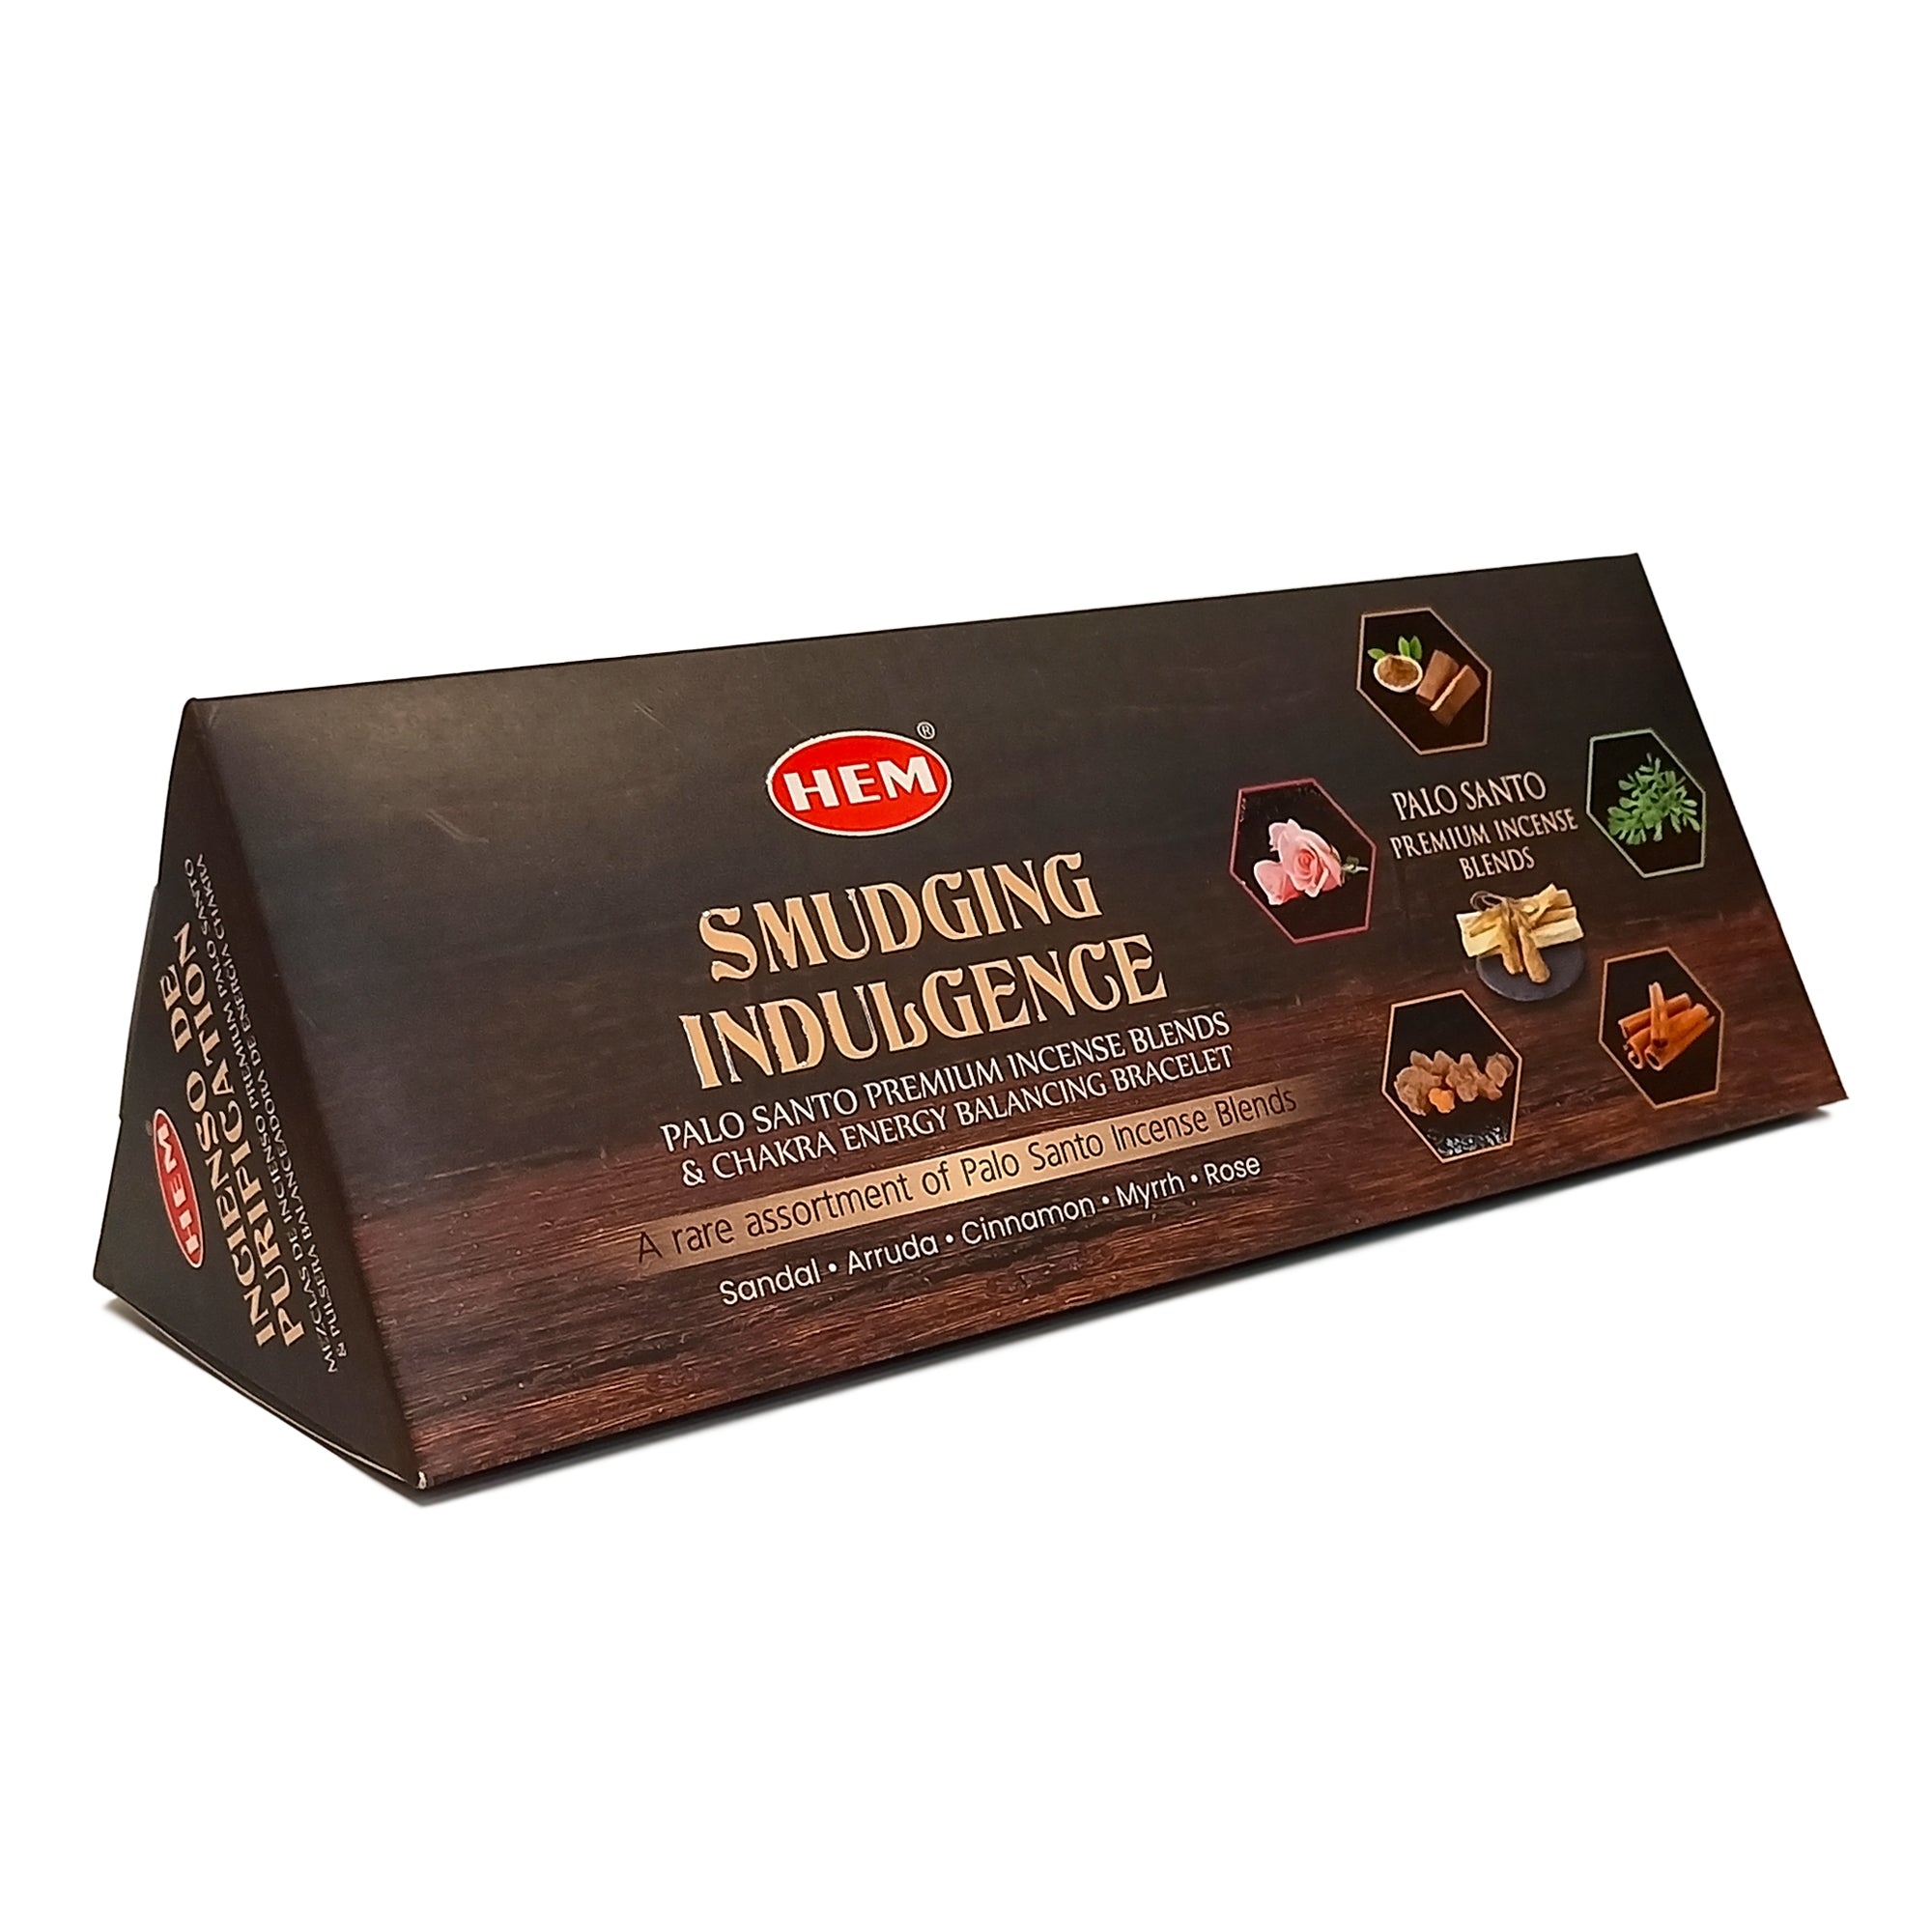 hem-smudging-indulgence-masala-incense-stick-kit